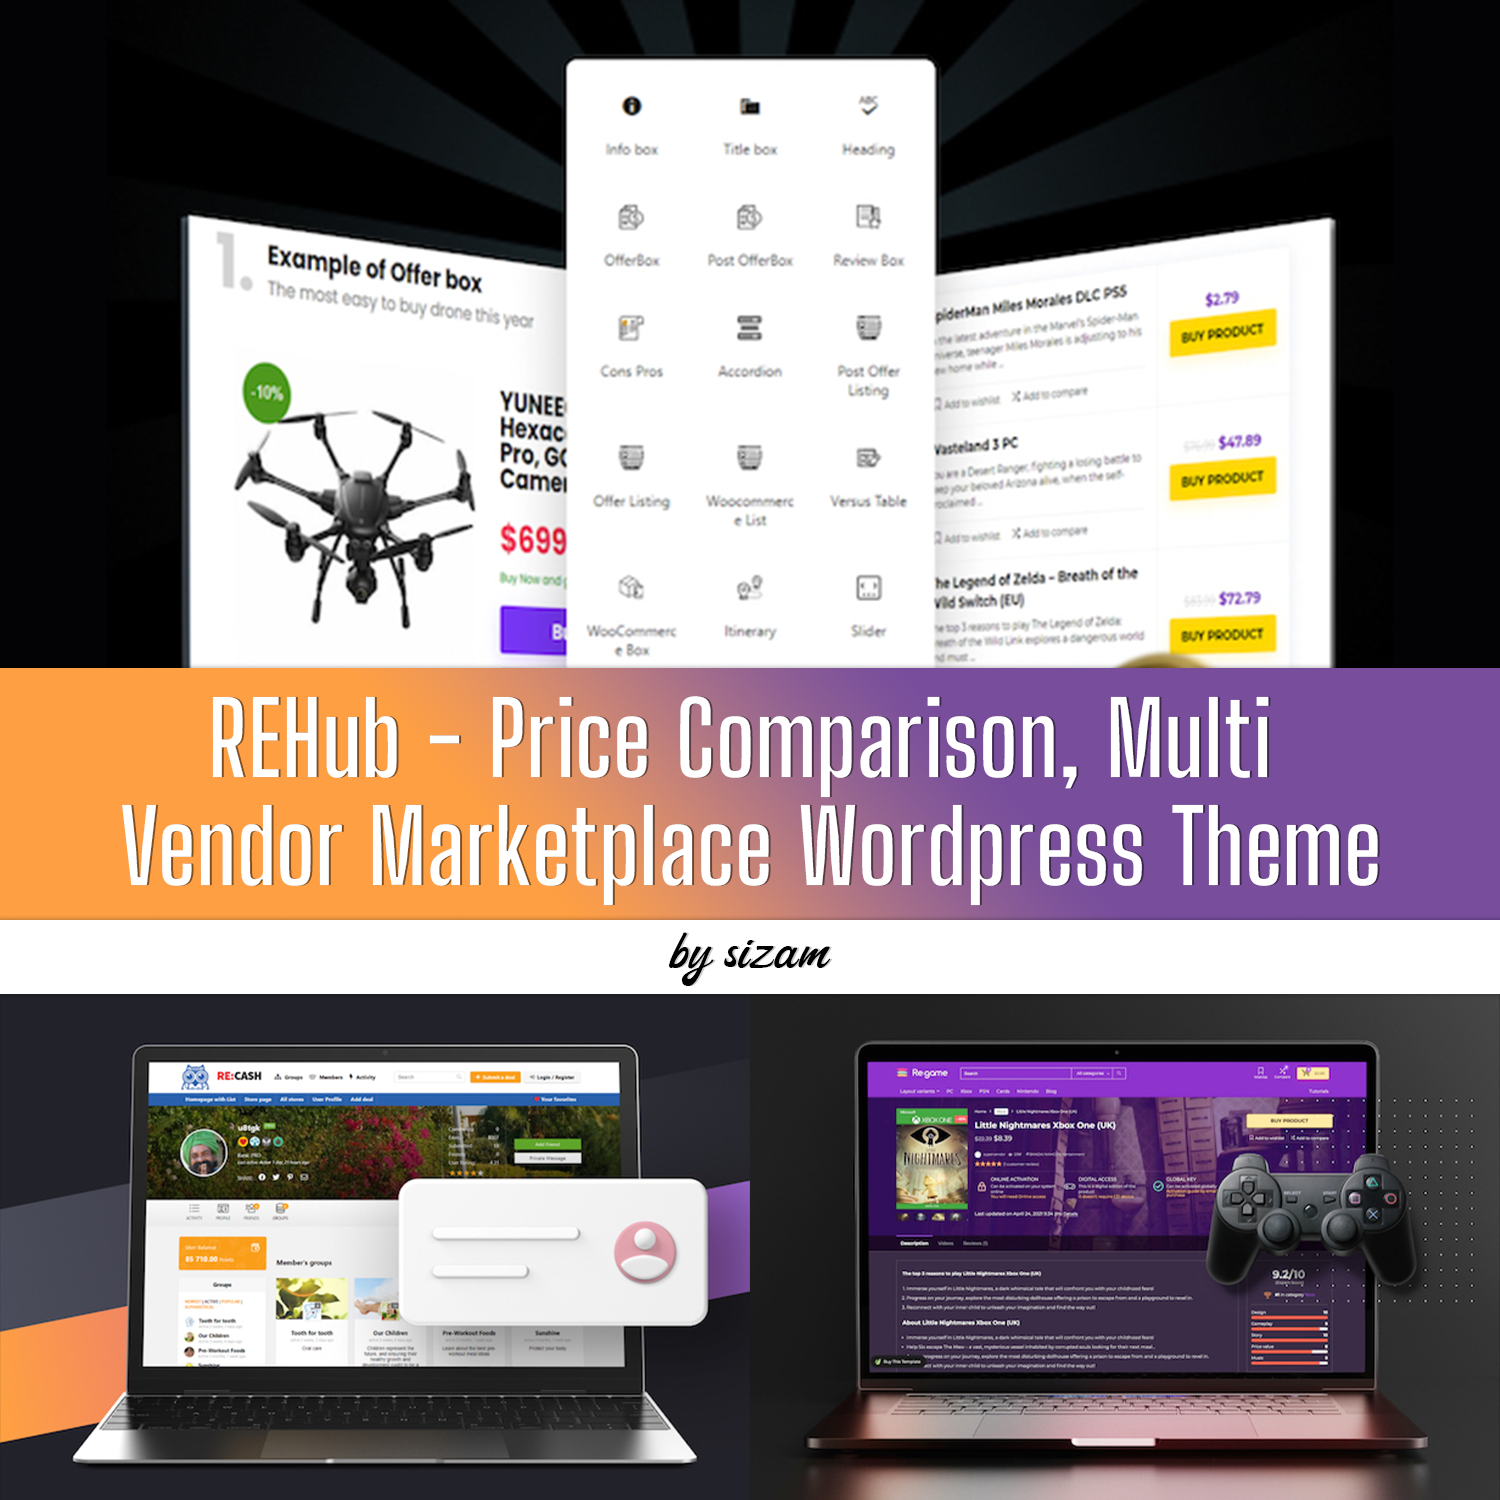 Images with rehub price comparison multi vendor marketplace wordpress theme.